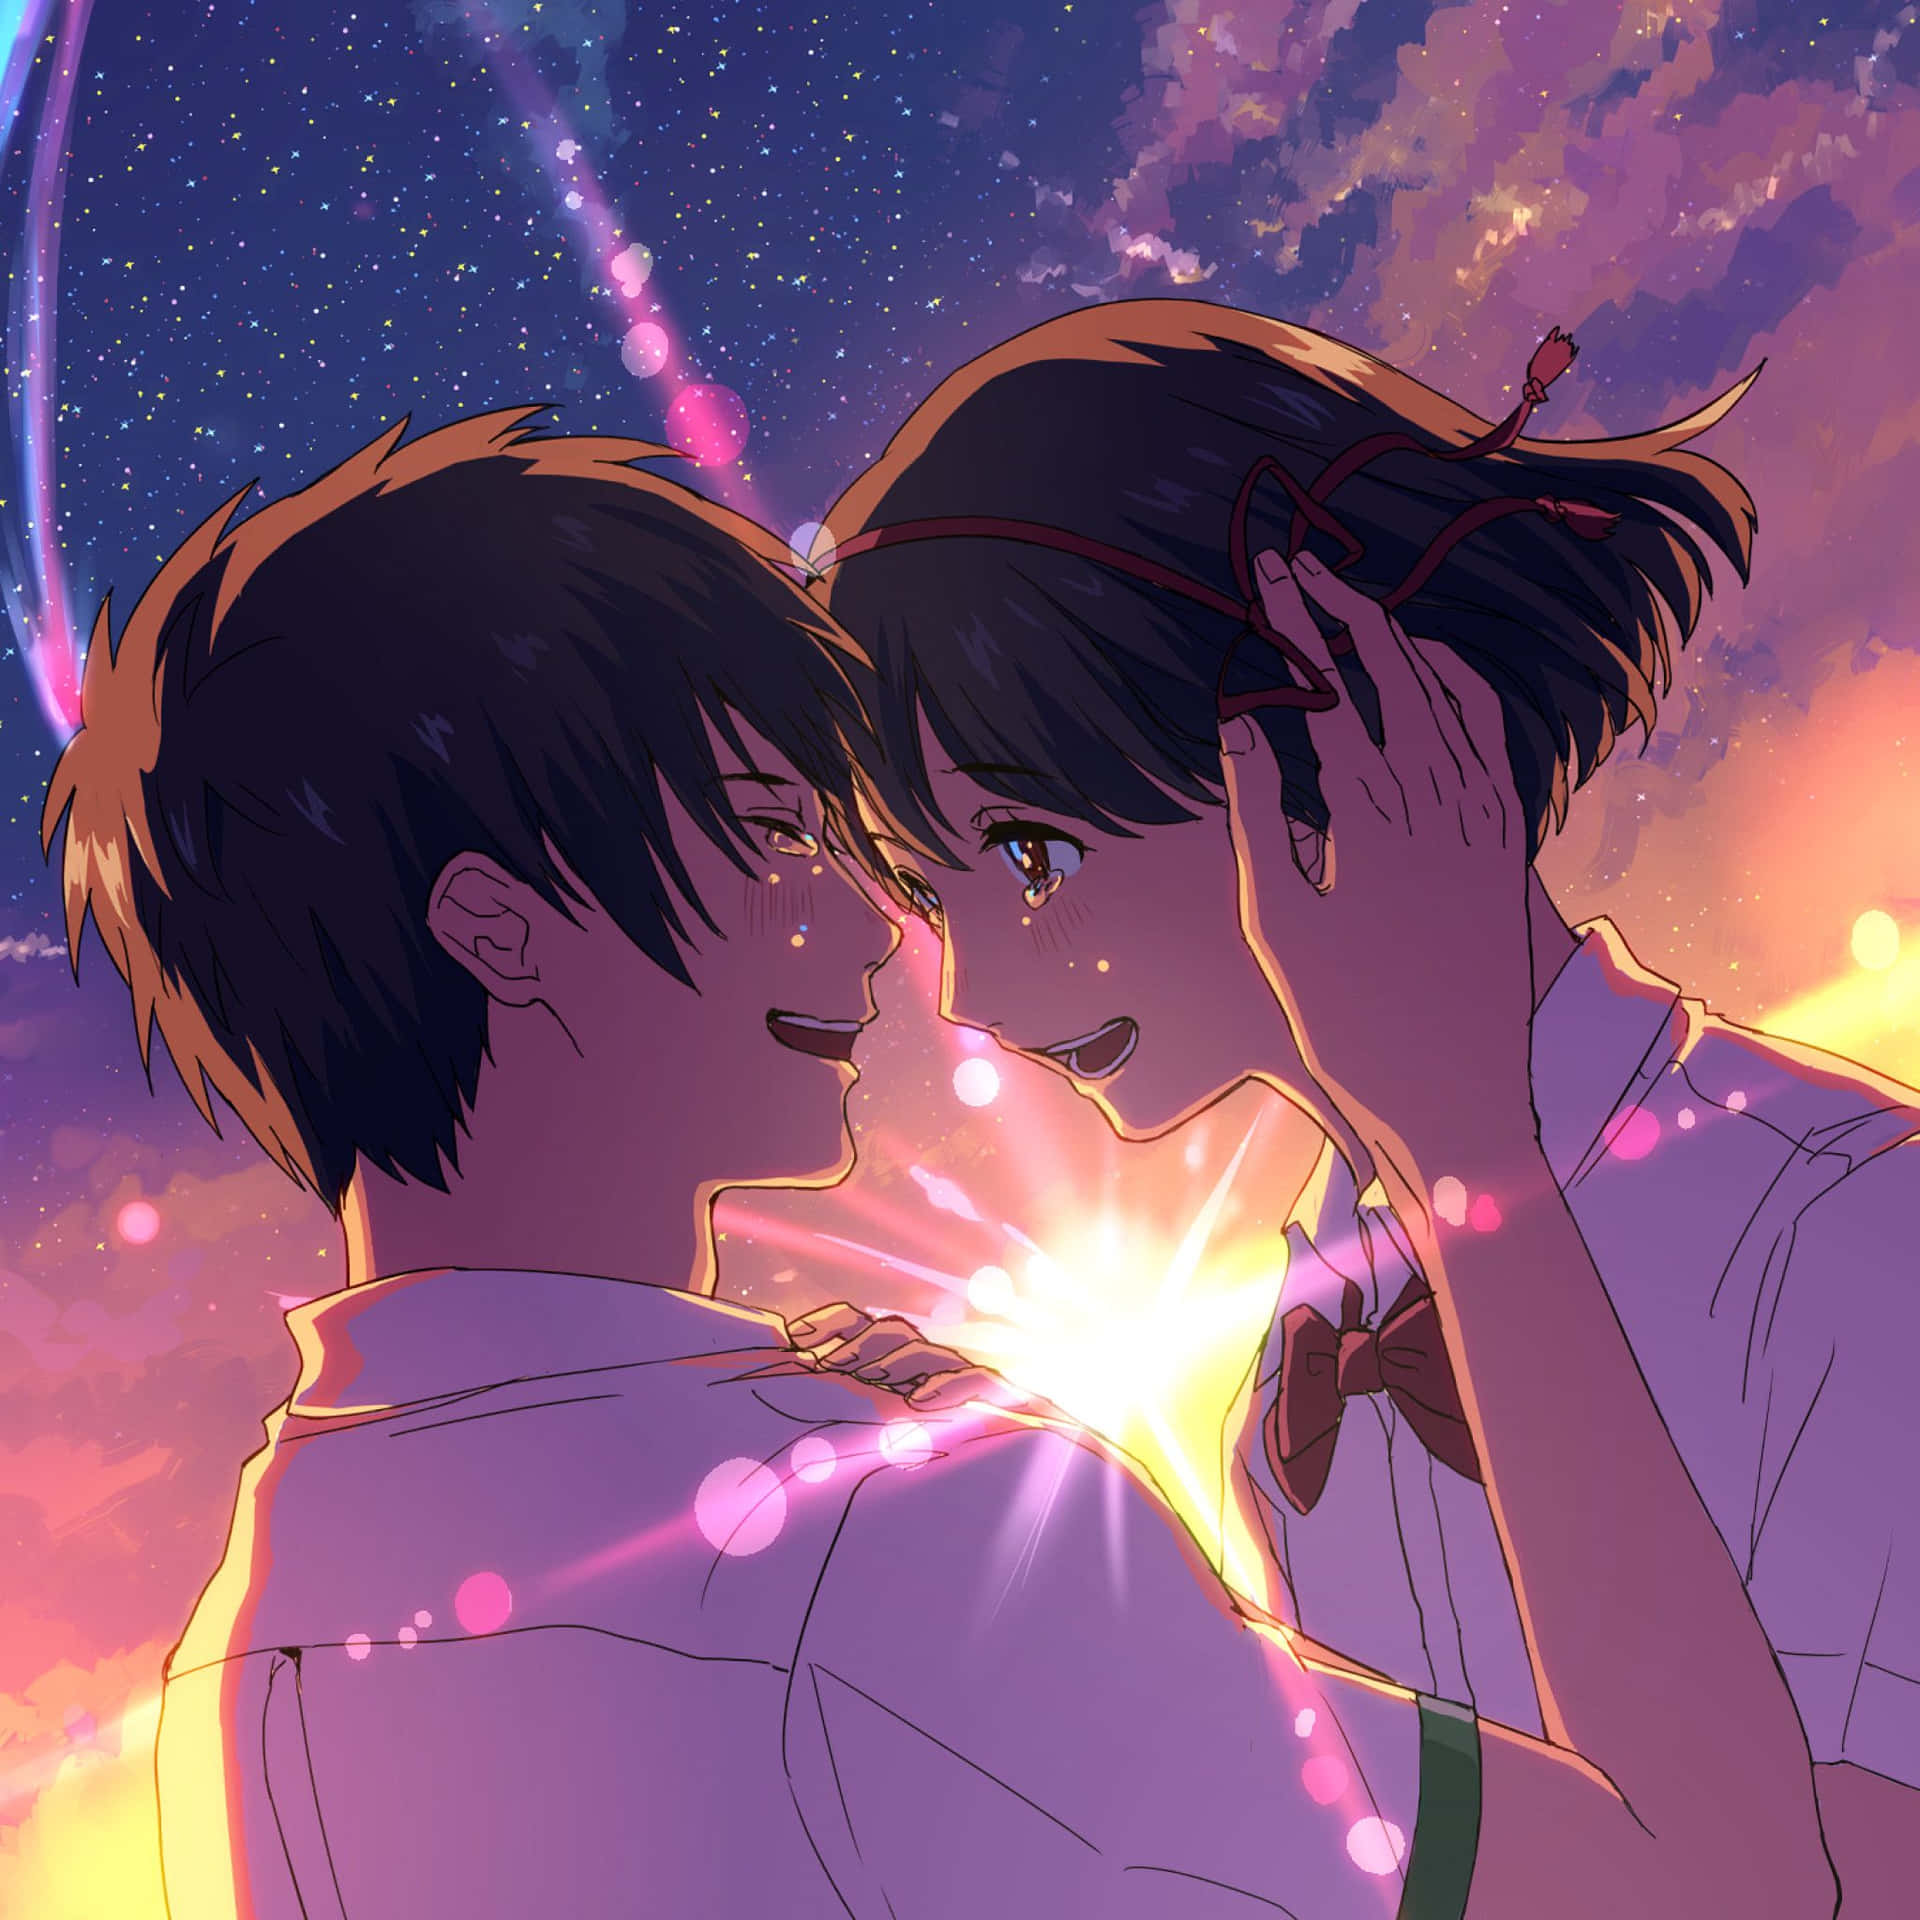 Romance anime list on Pinterest